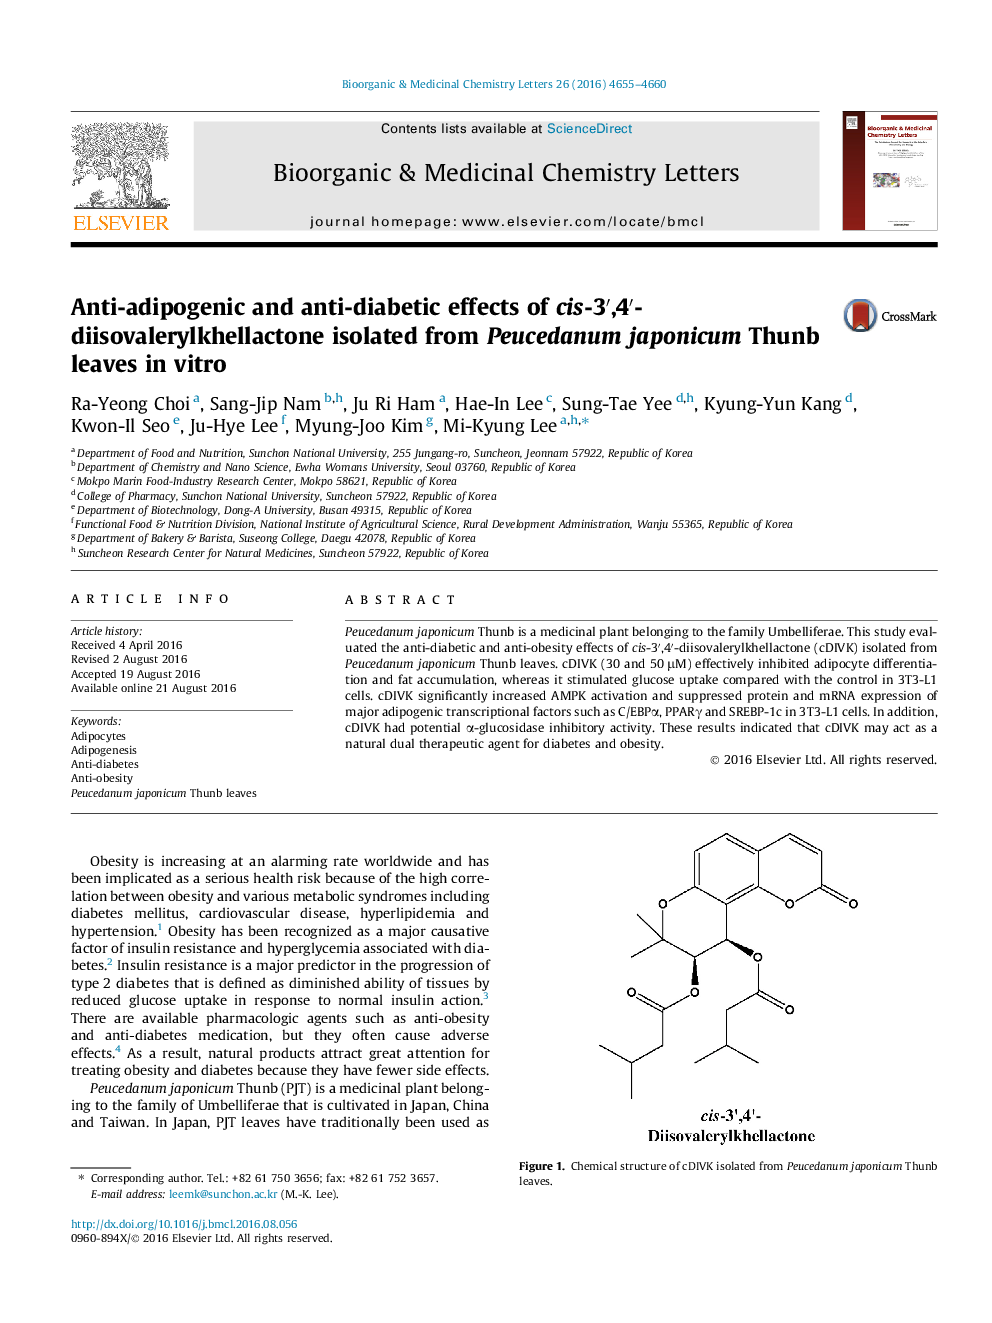 Anti-adipogenic and anti-diabetic effects of cis-3â²,4â²-diisovalerylkhellactone isolated from Peucedanum japonicum Thunb leaves in vitro